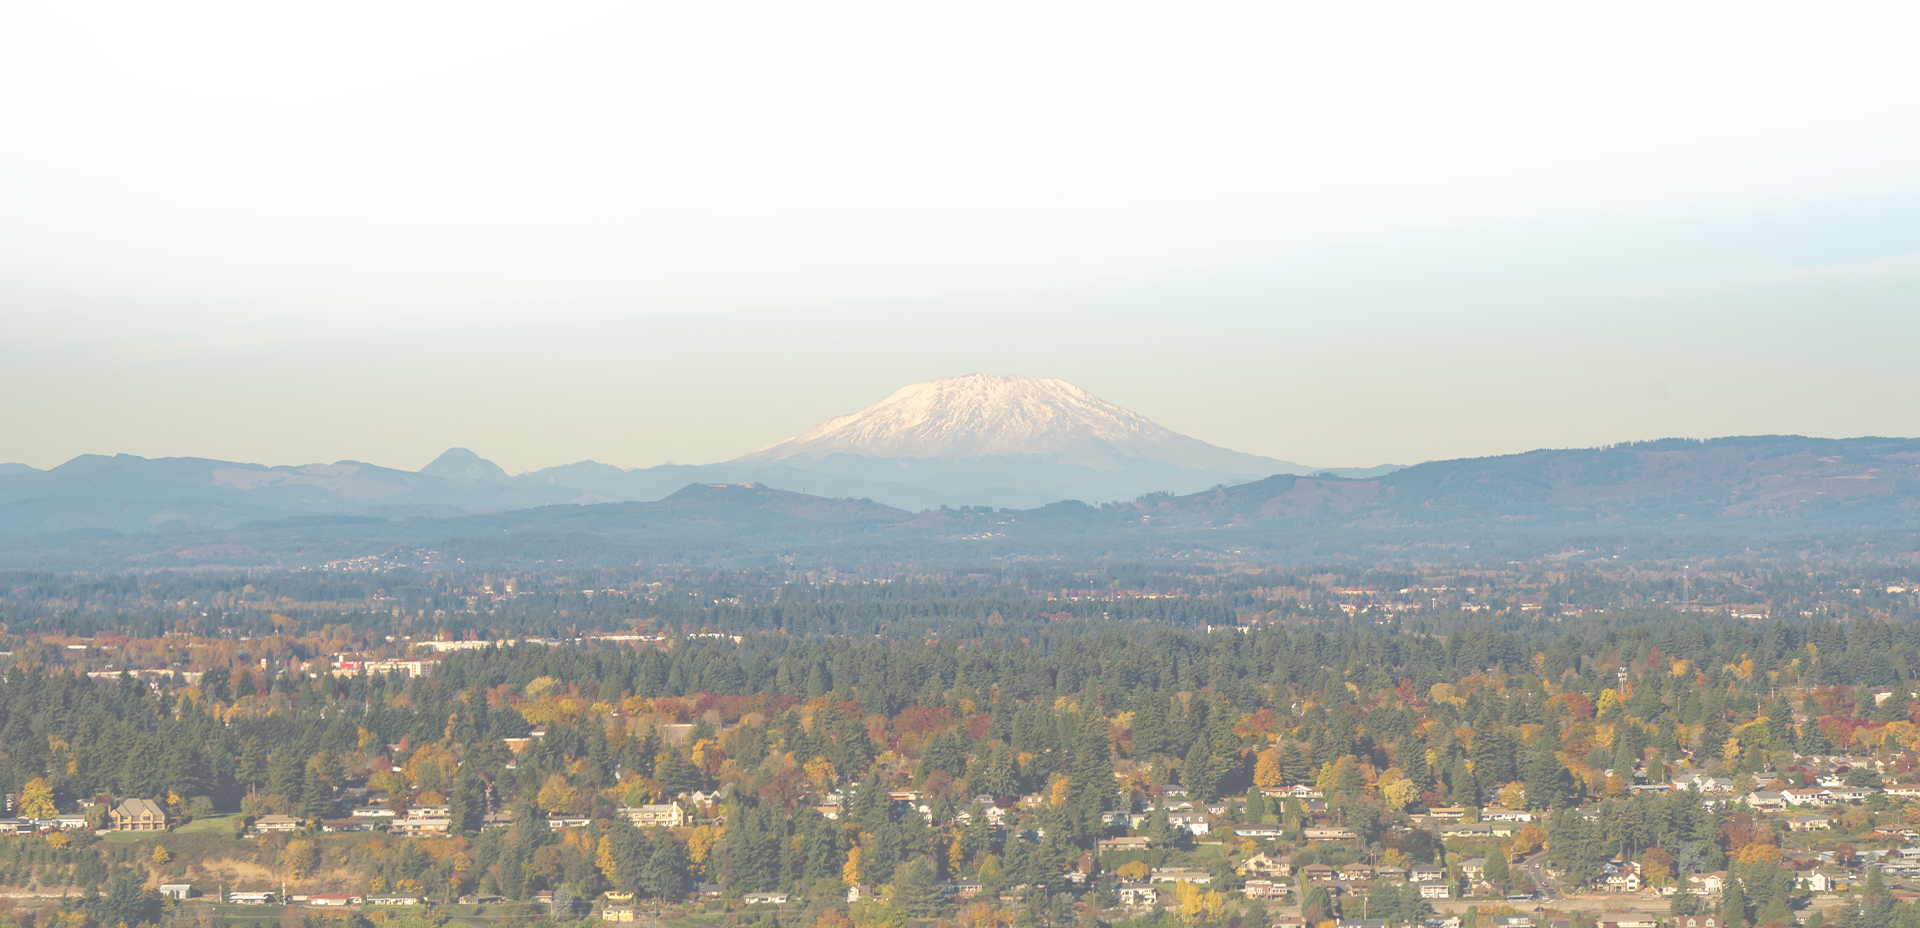 A landscape image of Vancouver, Washington